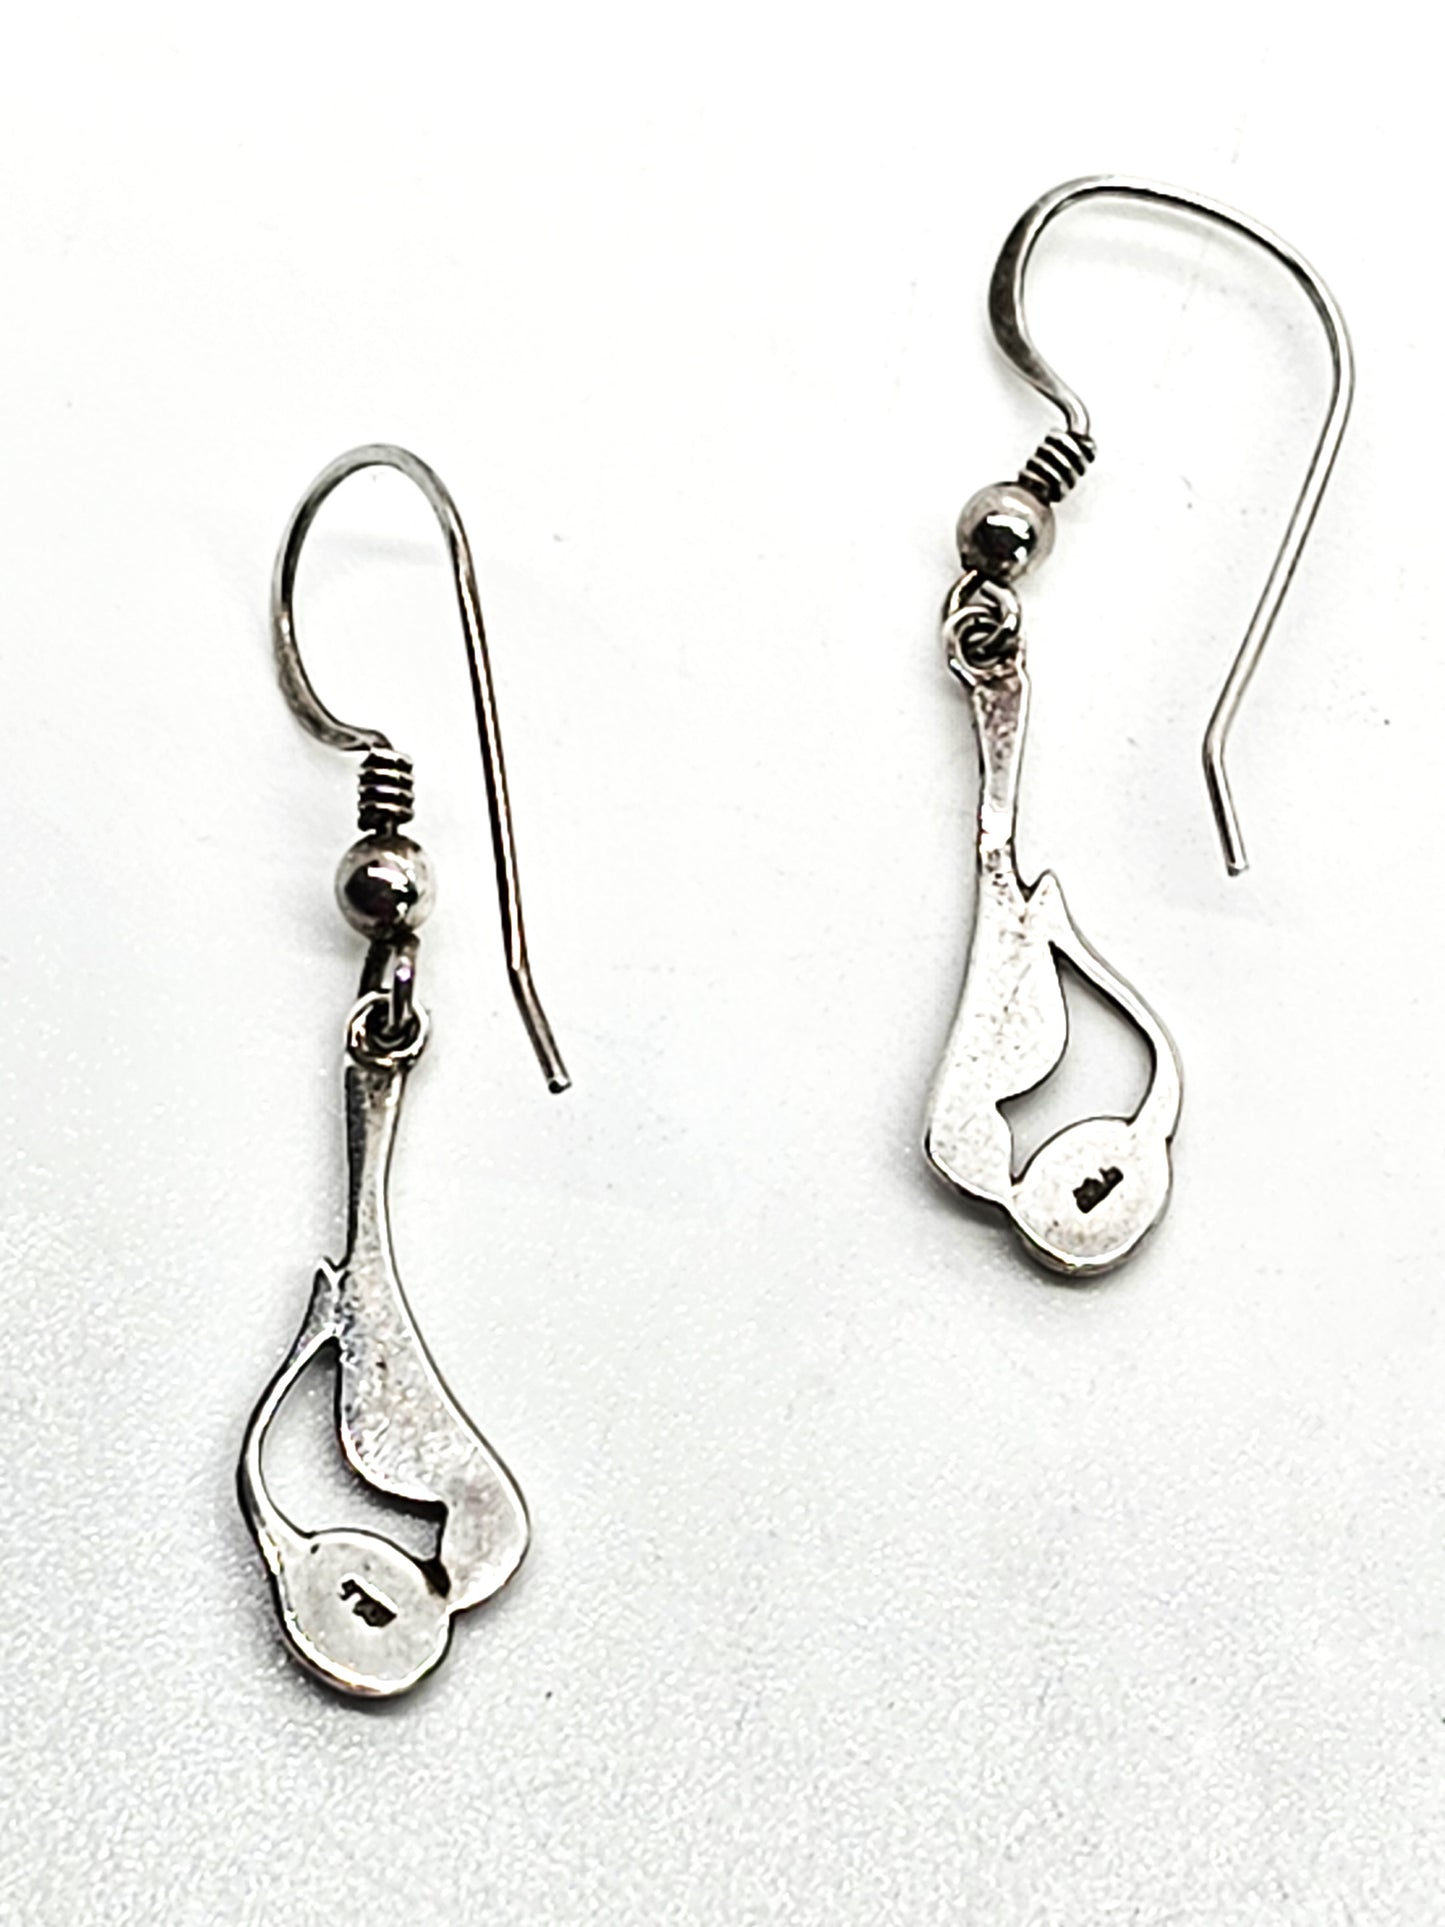 Black onyx sterling silver vintage modernist artisan earrings